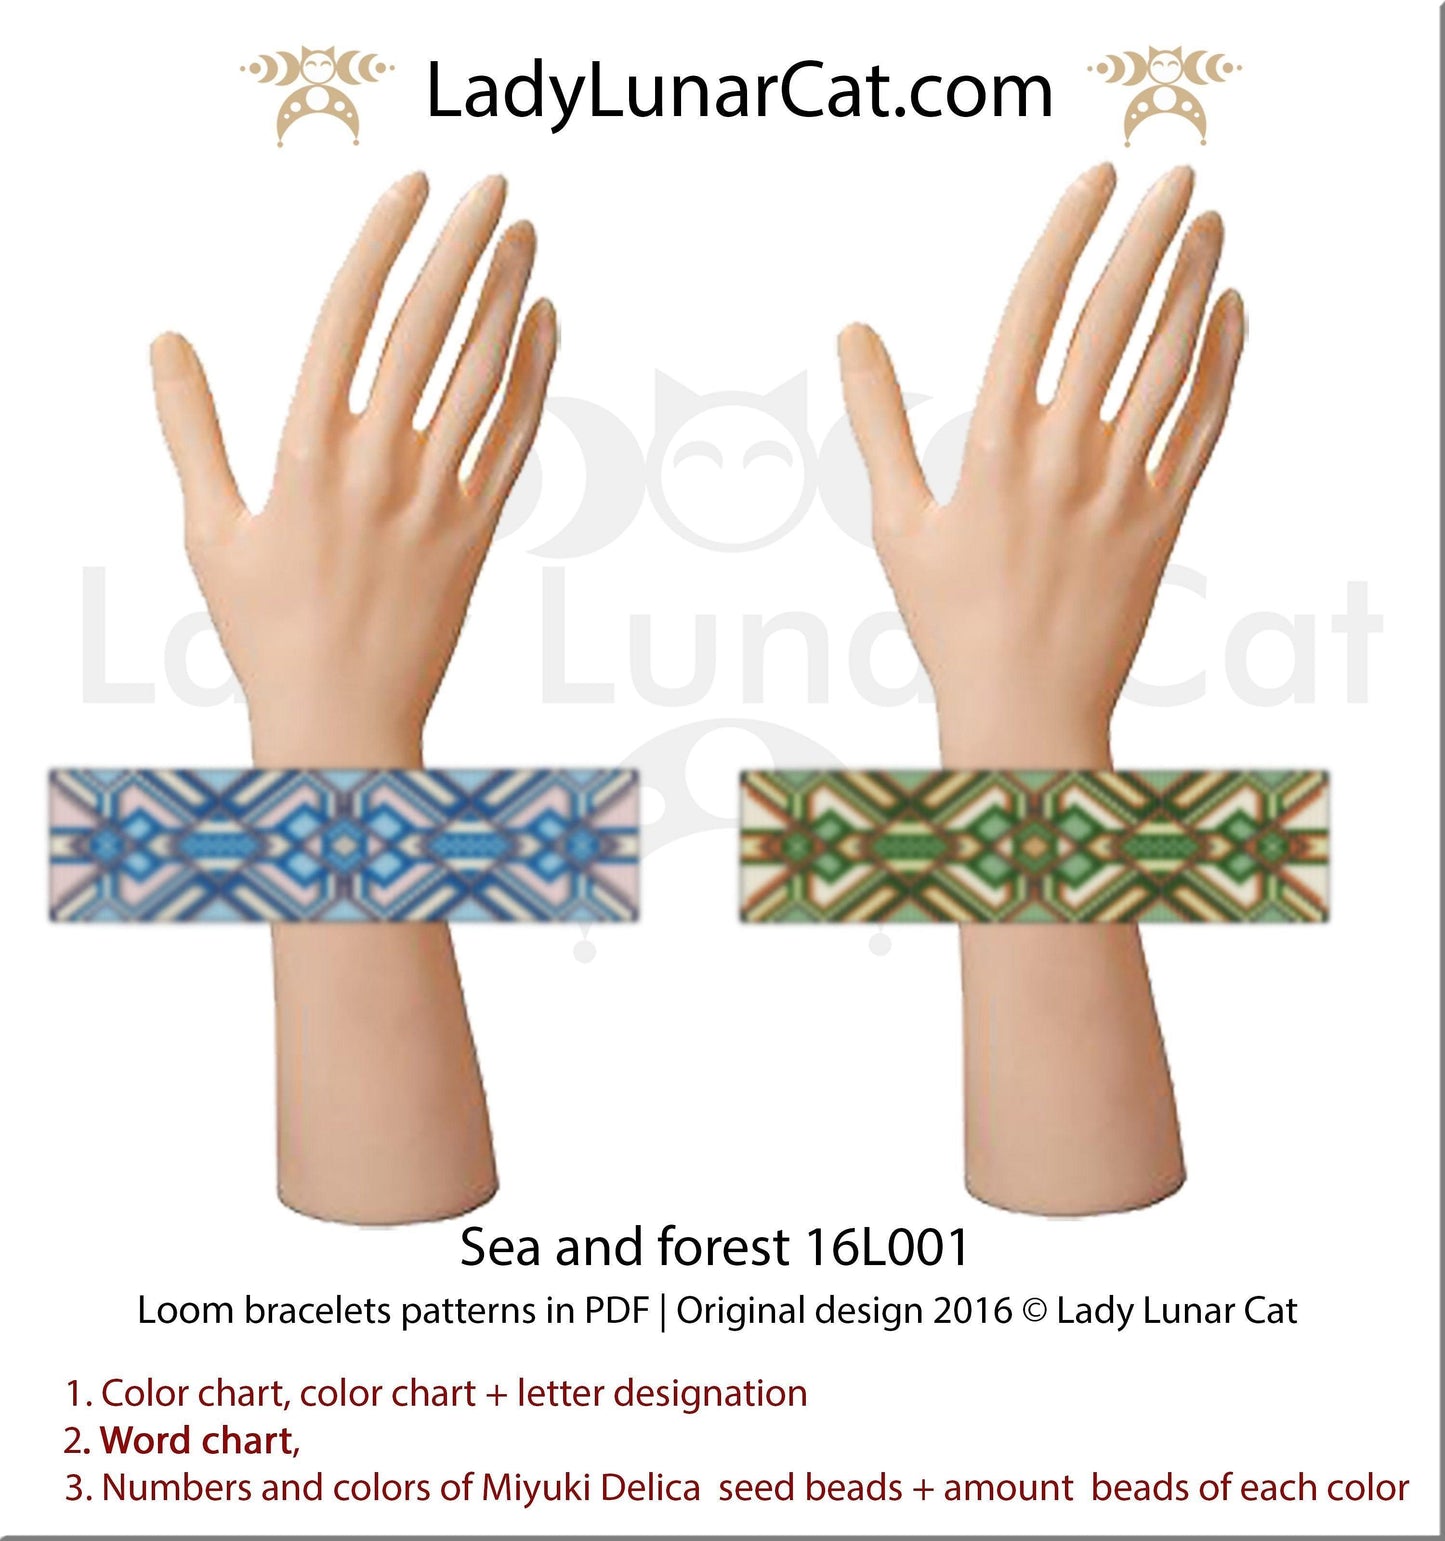 Bead loom pattern for bracelets - Sea and forest 16L001 LadyLunarCat